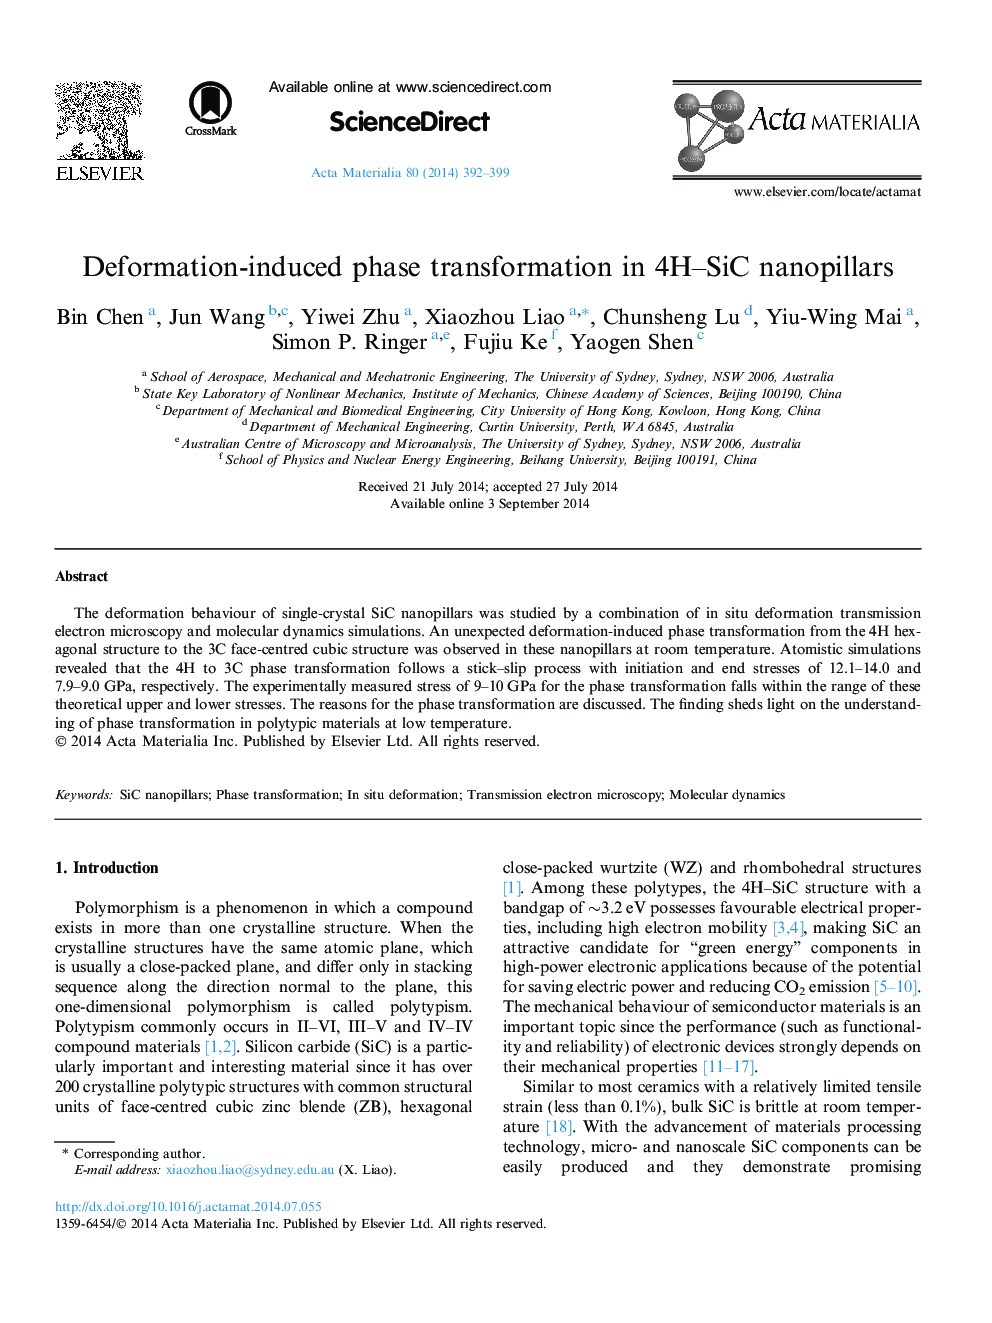 Deformation-induced phase transformation in 4H-SiC nanopillars